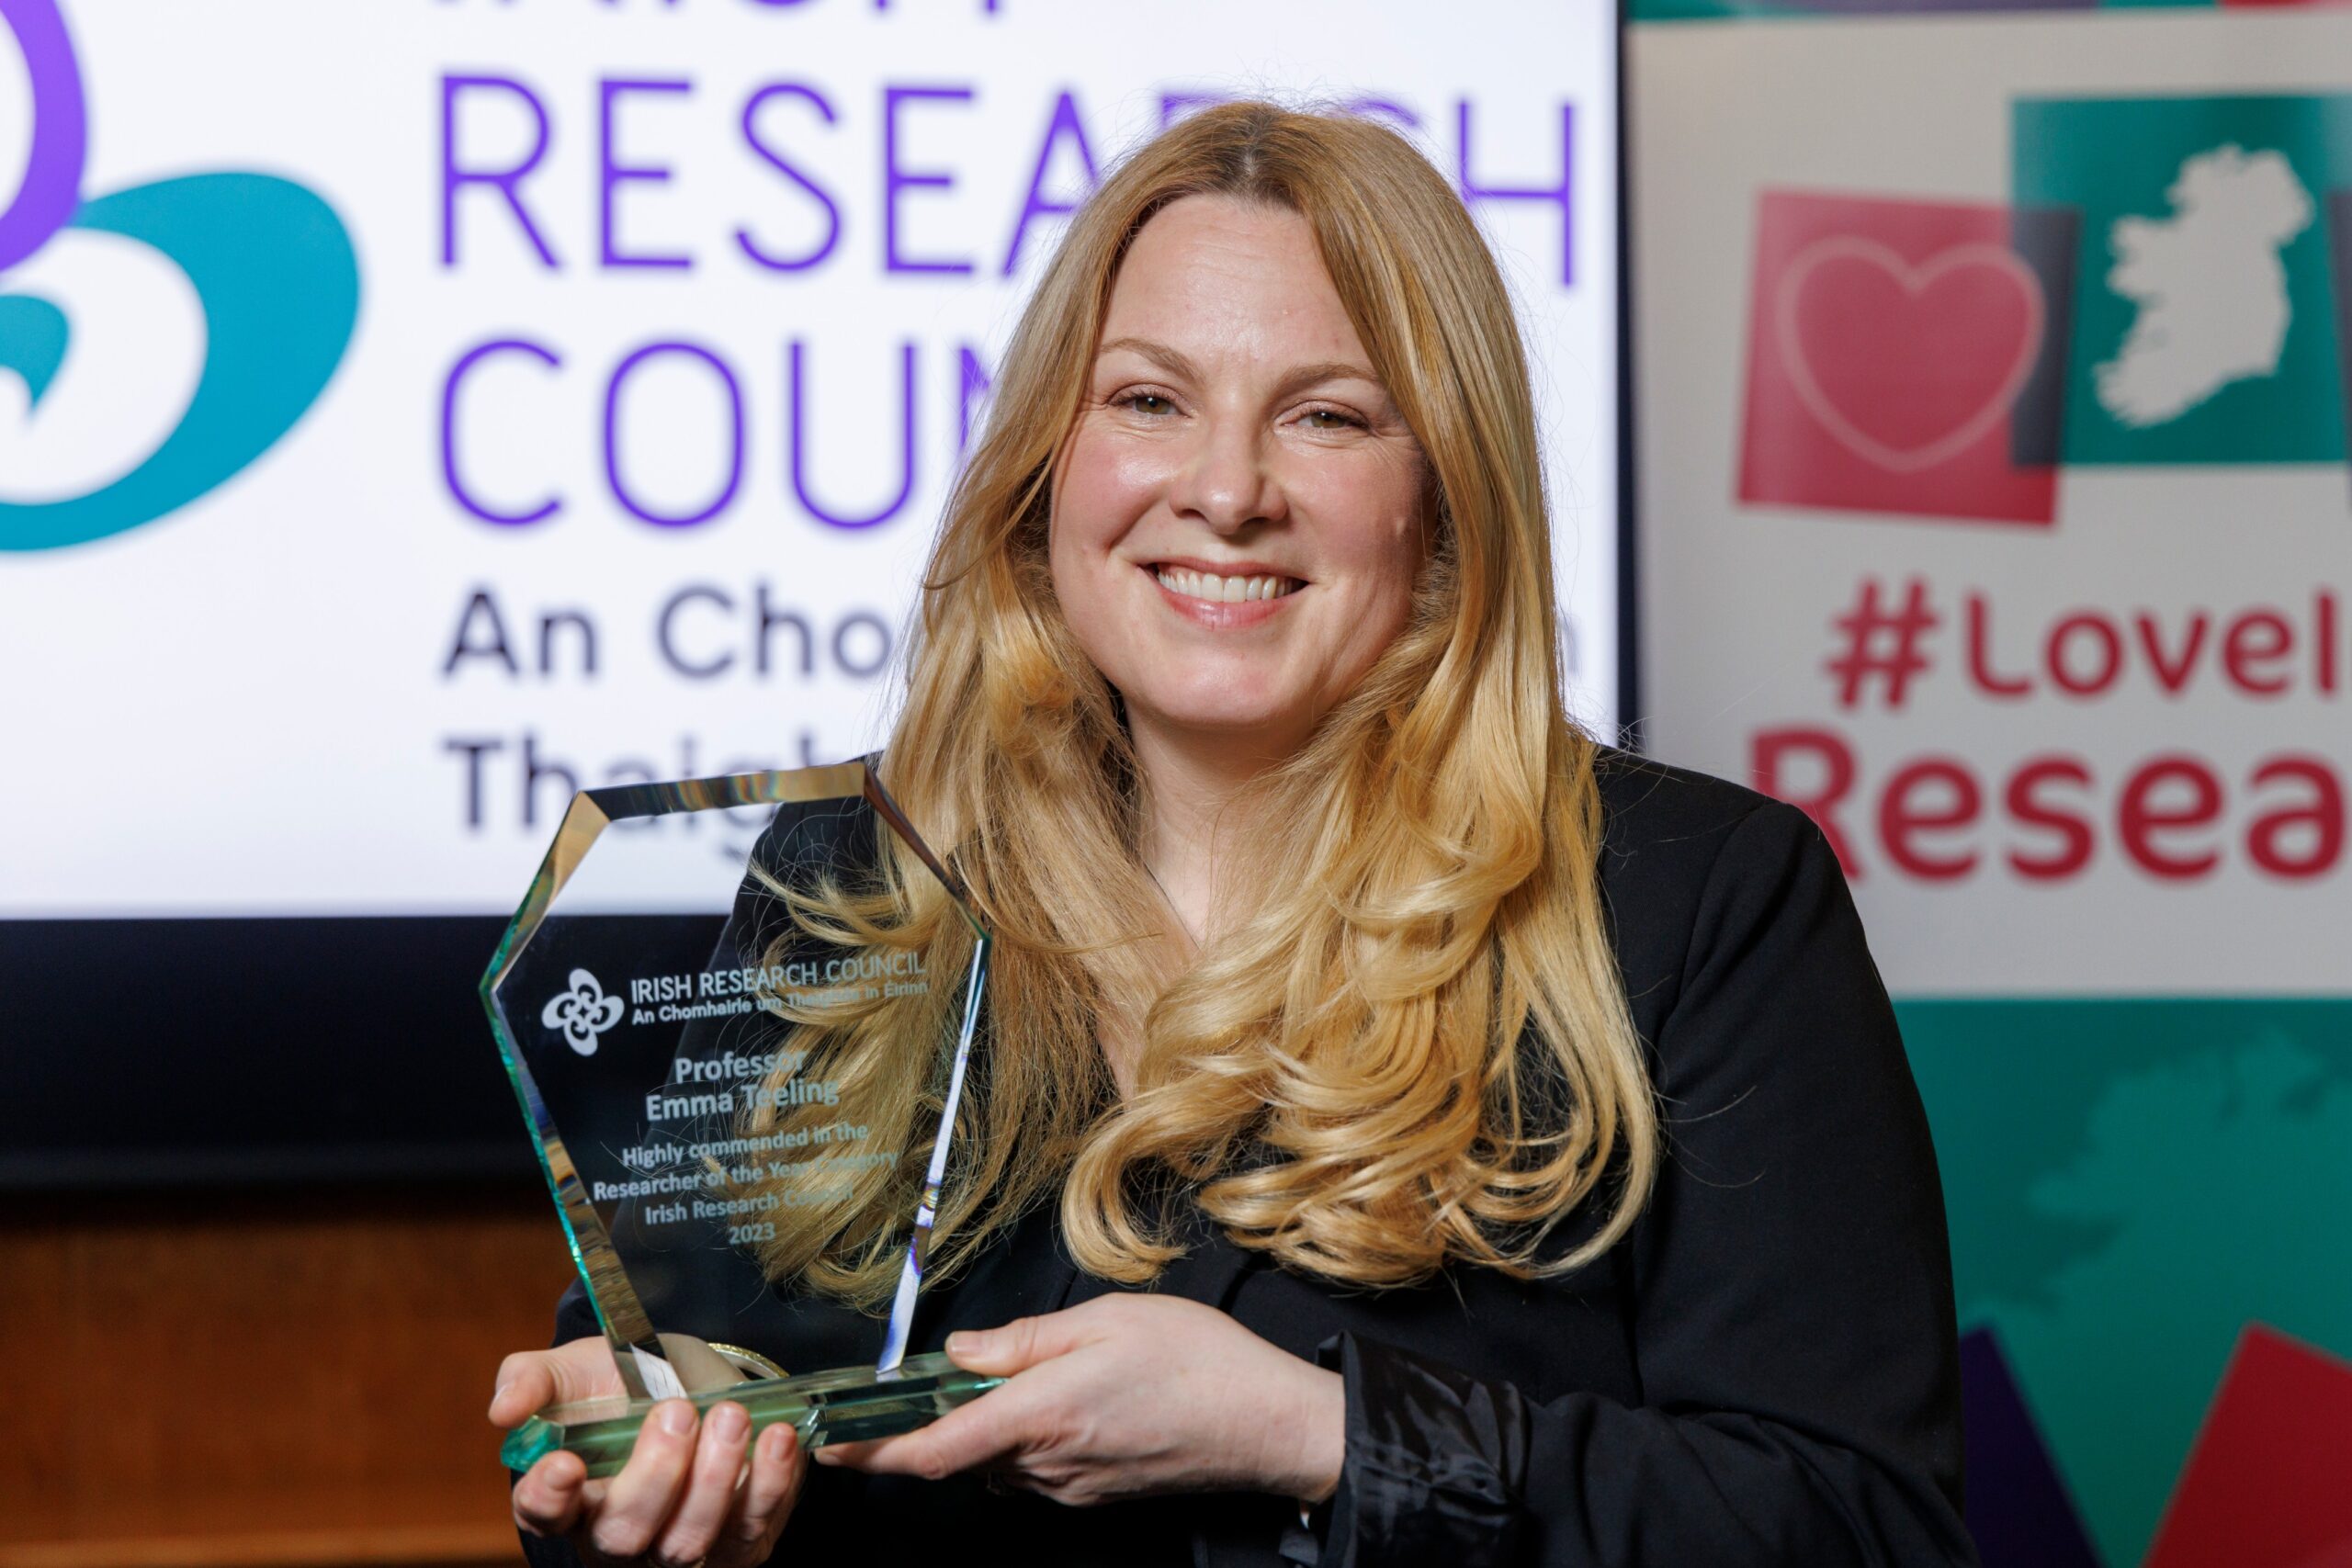 Professor Emma Teeling pictured holding a trophy